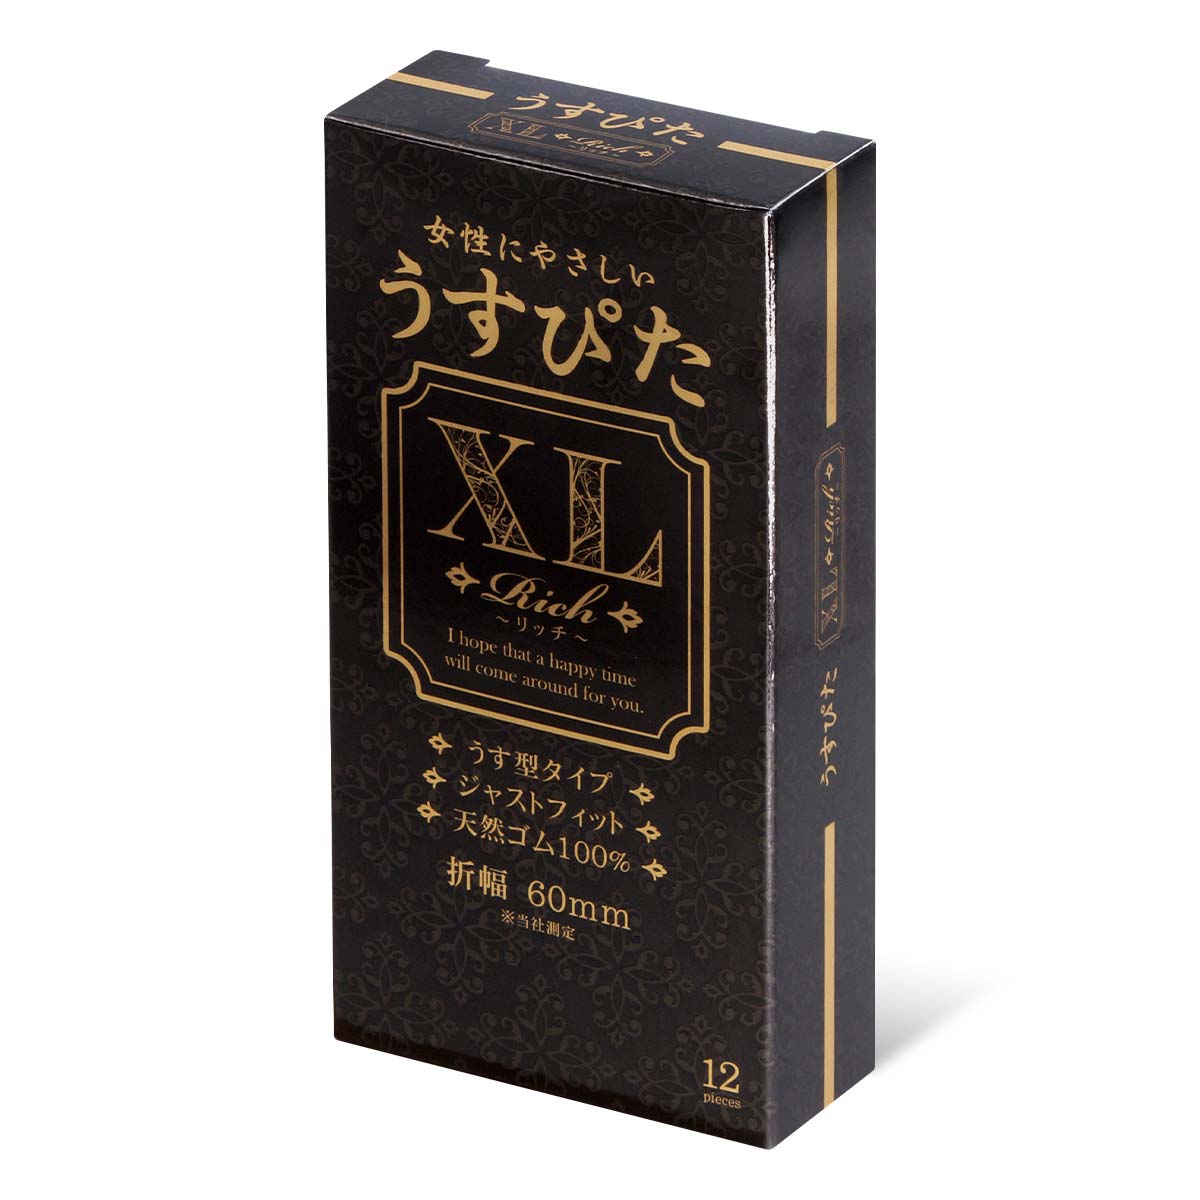 Usu-Pita XL 60mm 12's Pack Latex Condom-p_1